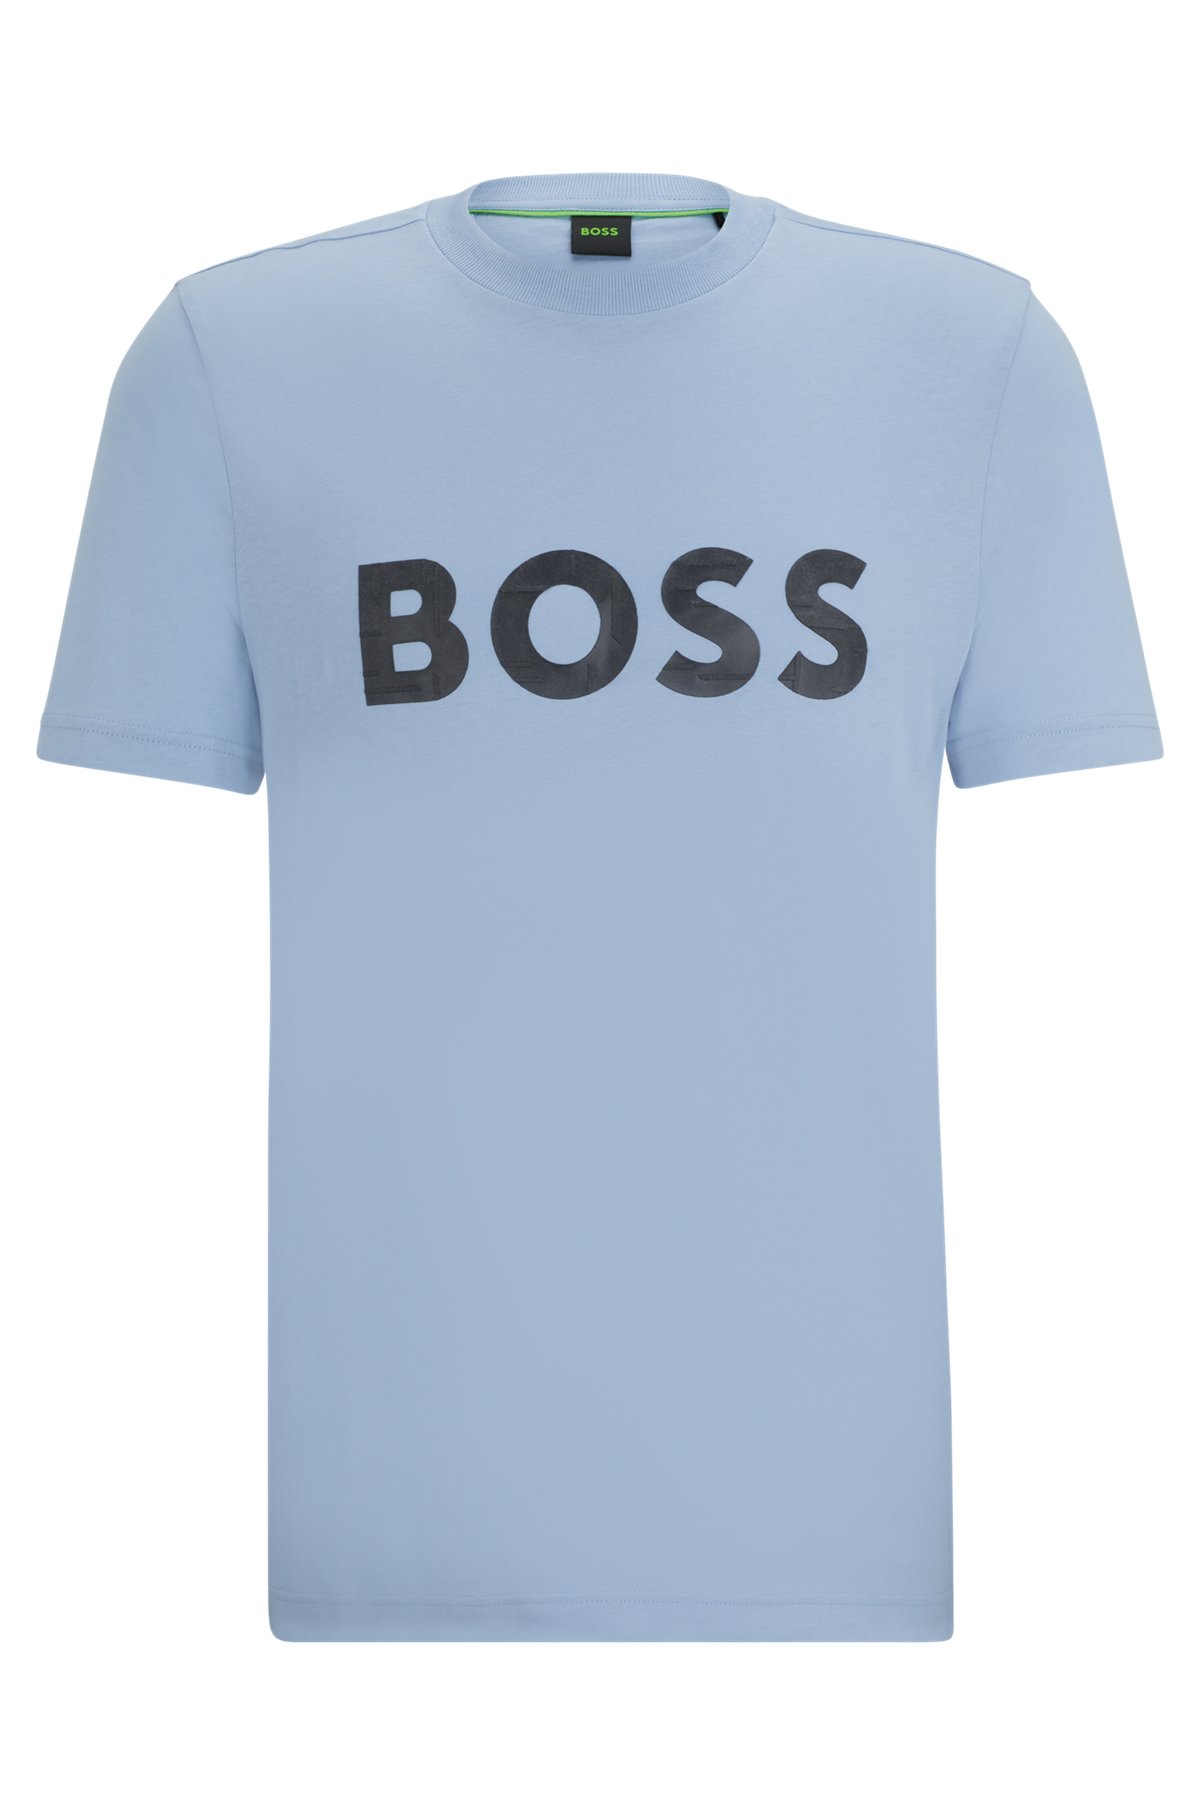 Contrast logo-print T-shirt in cotton jersey, Light Blue